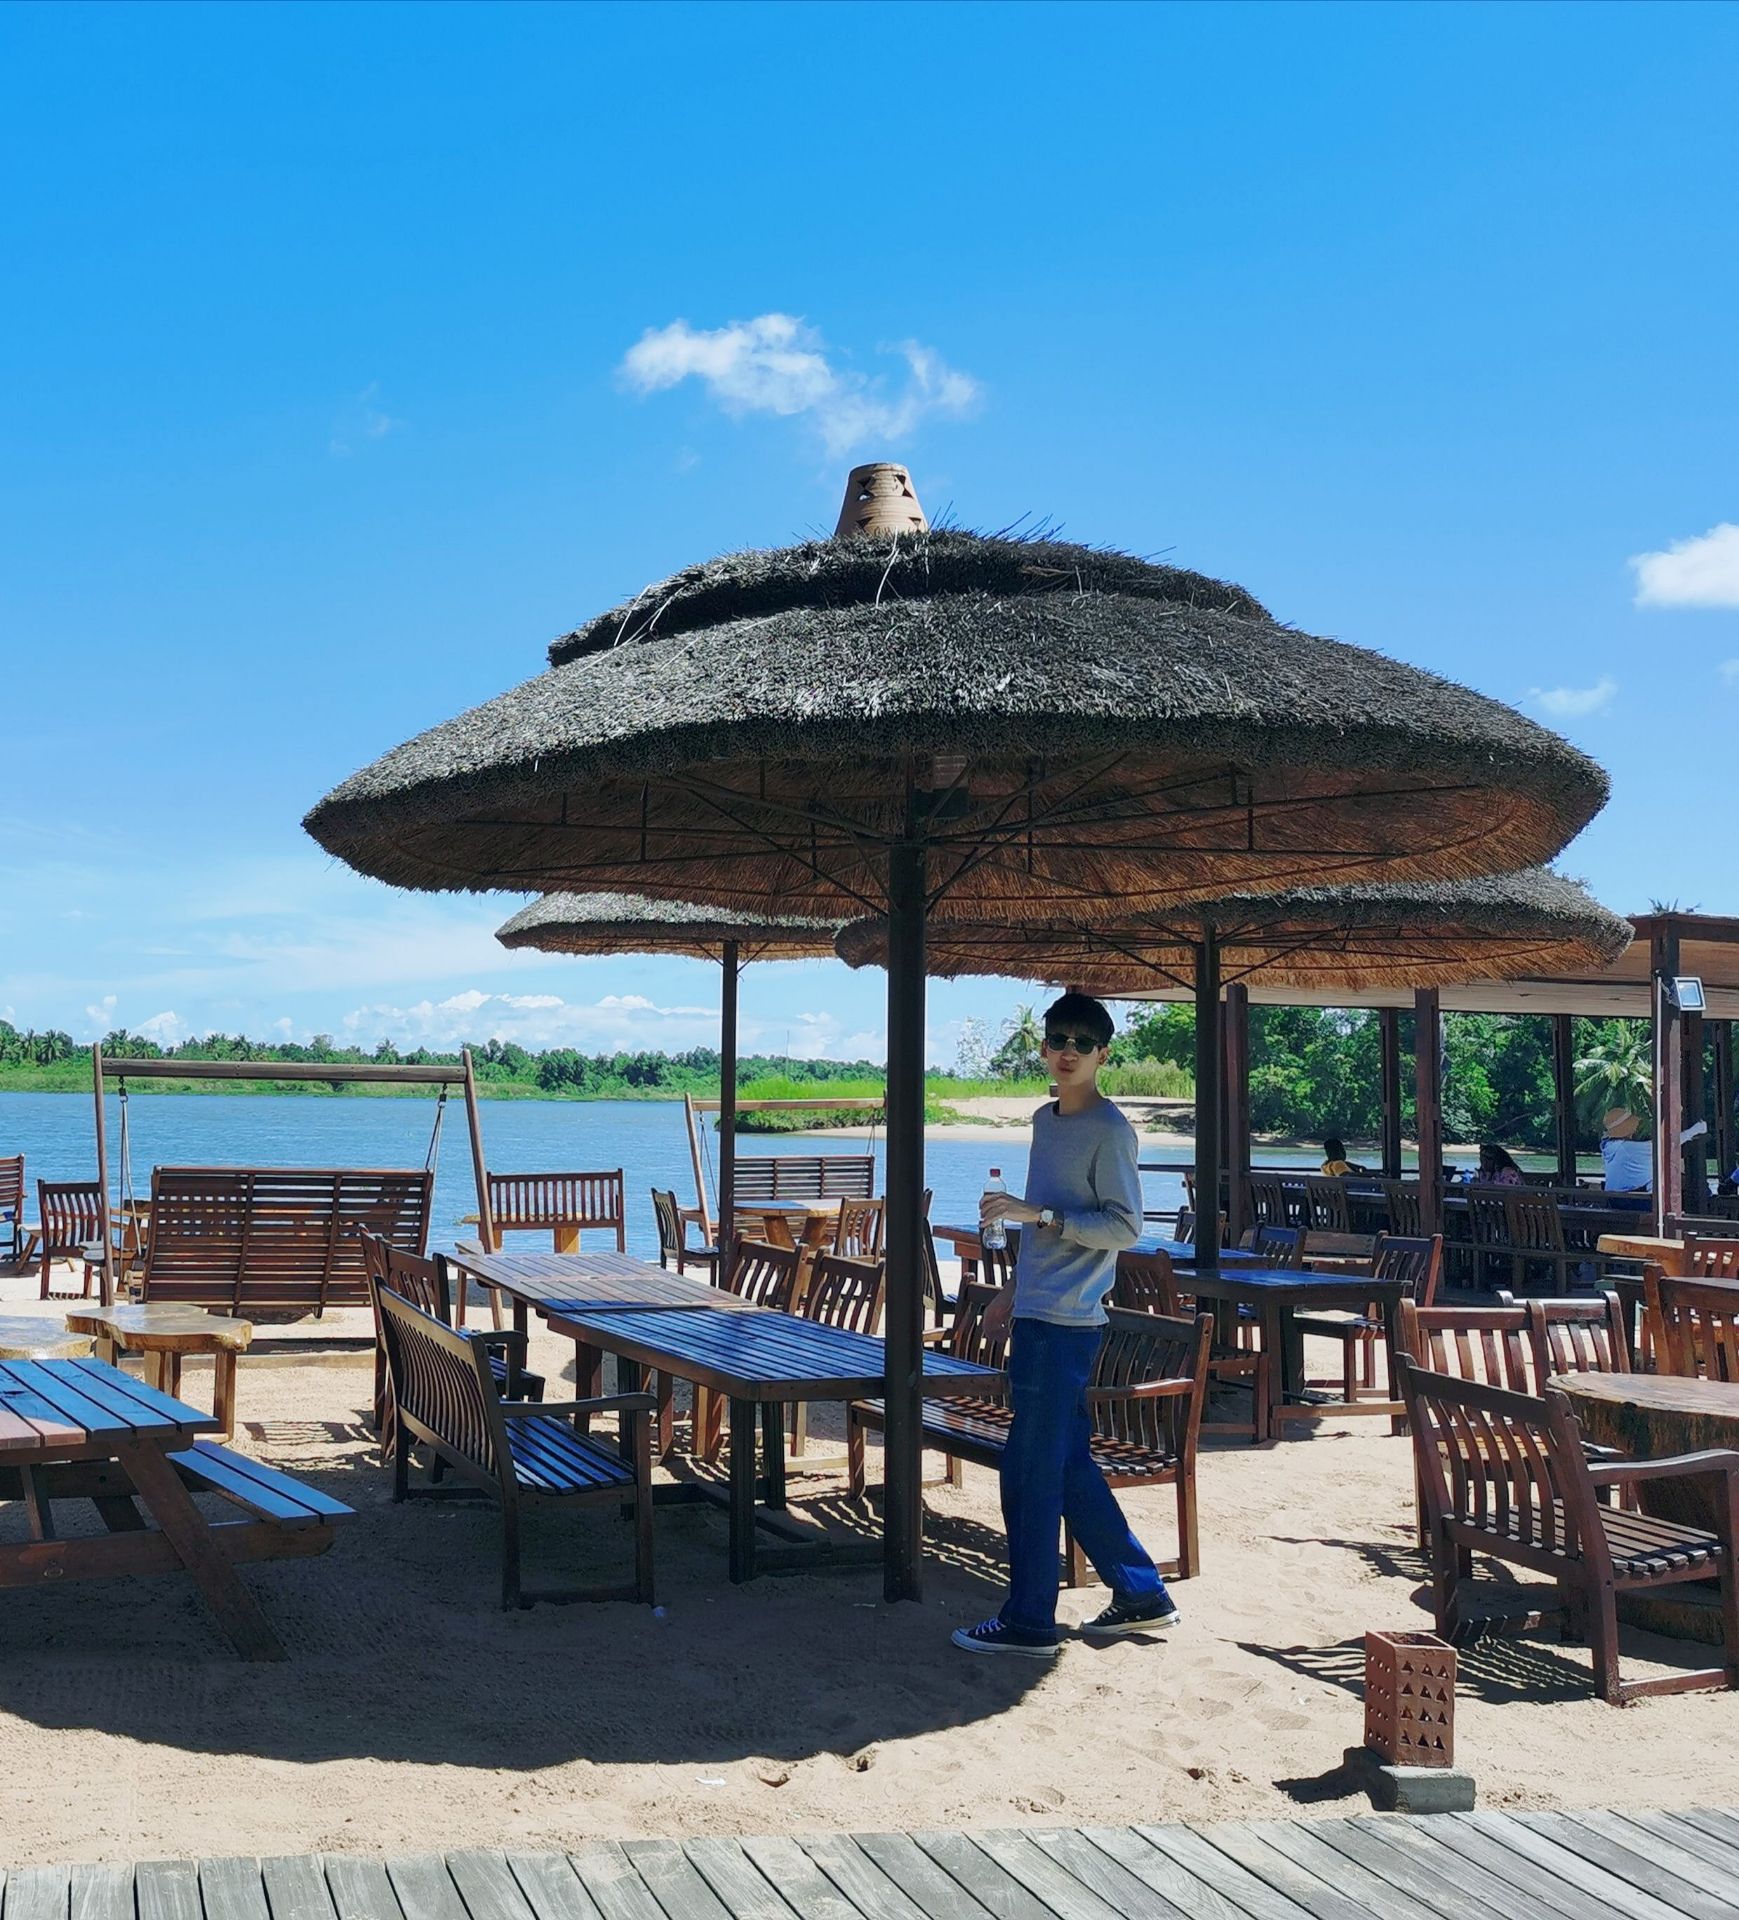 Volta River 世界最大的人造水库～而且天很蓝！在湖旁餐厅享用当地美食配上一瓶冰镇啤酒，很爽